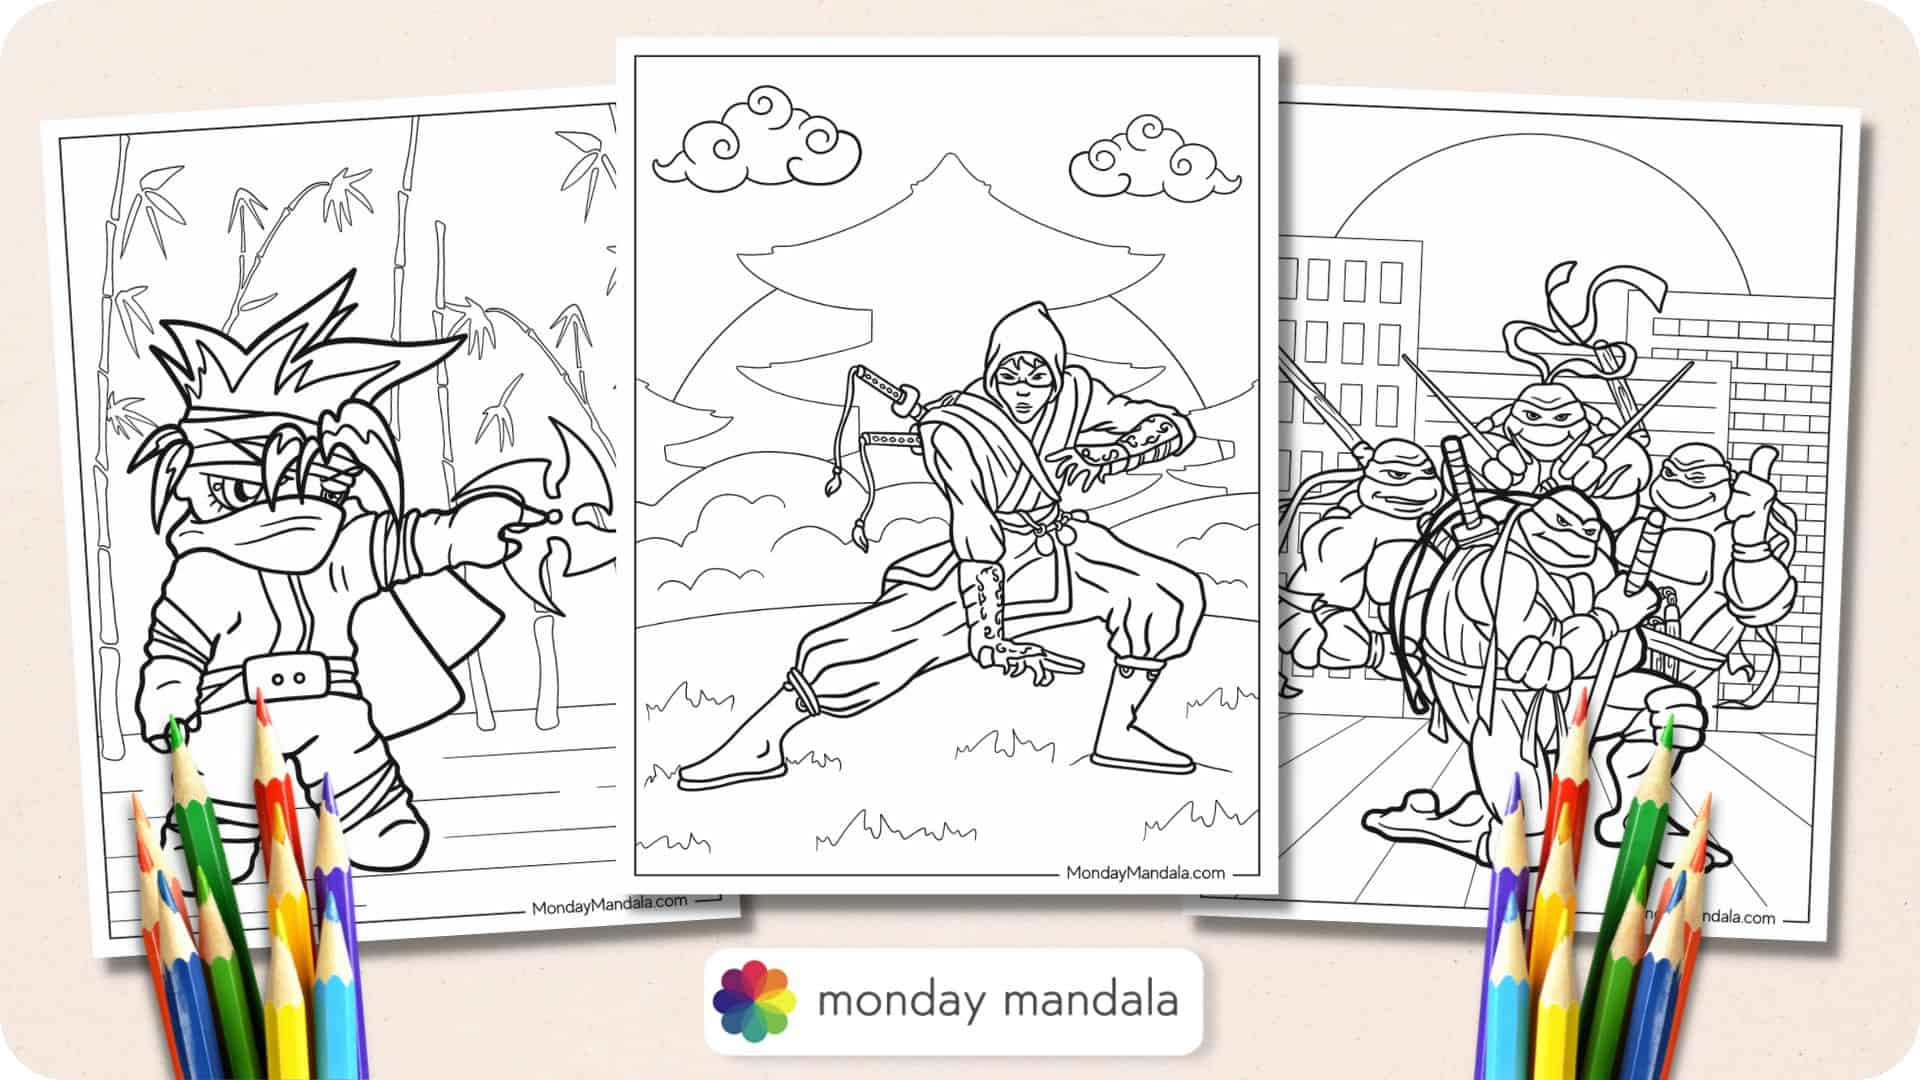 Ninja coloring pages free pdf printables